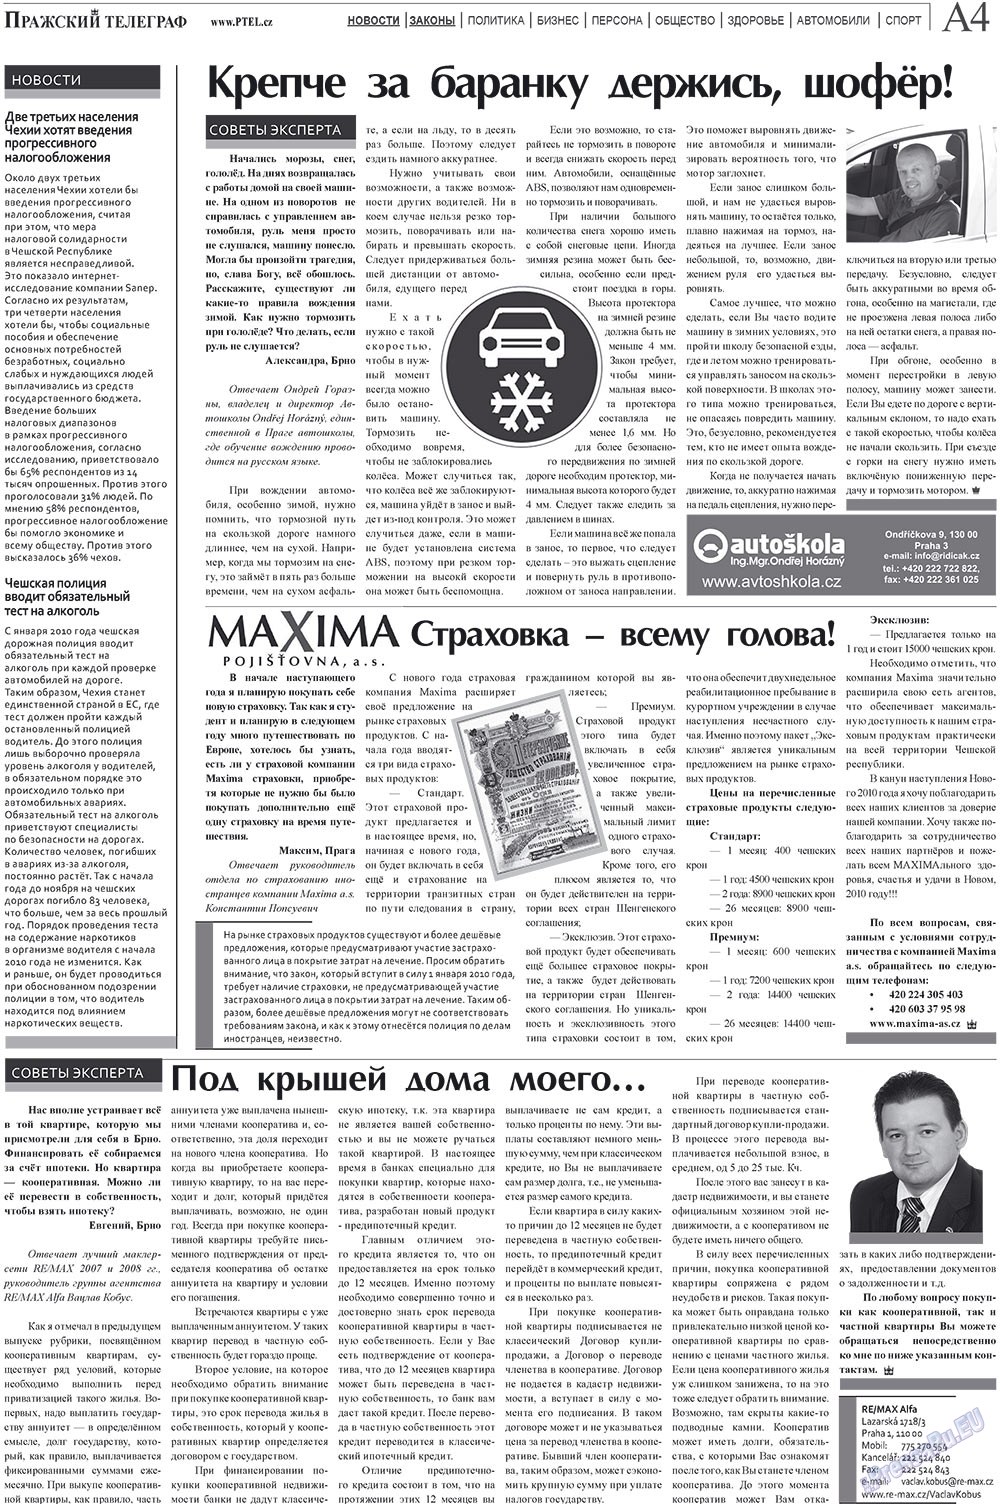 Пражский телеграф, газета. 2009 №36 стр.4